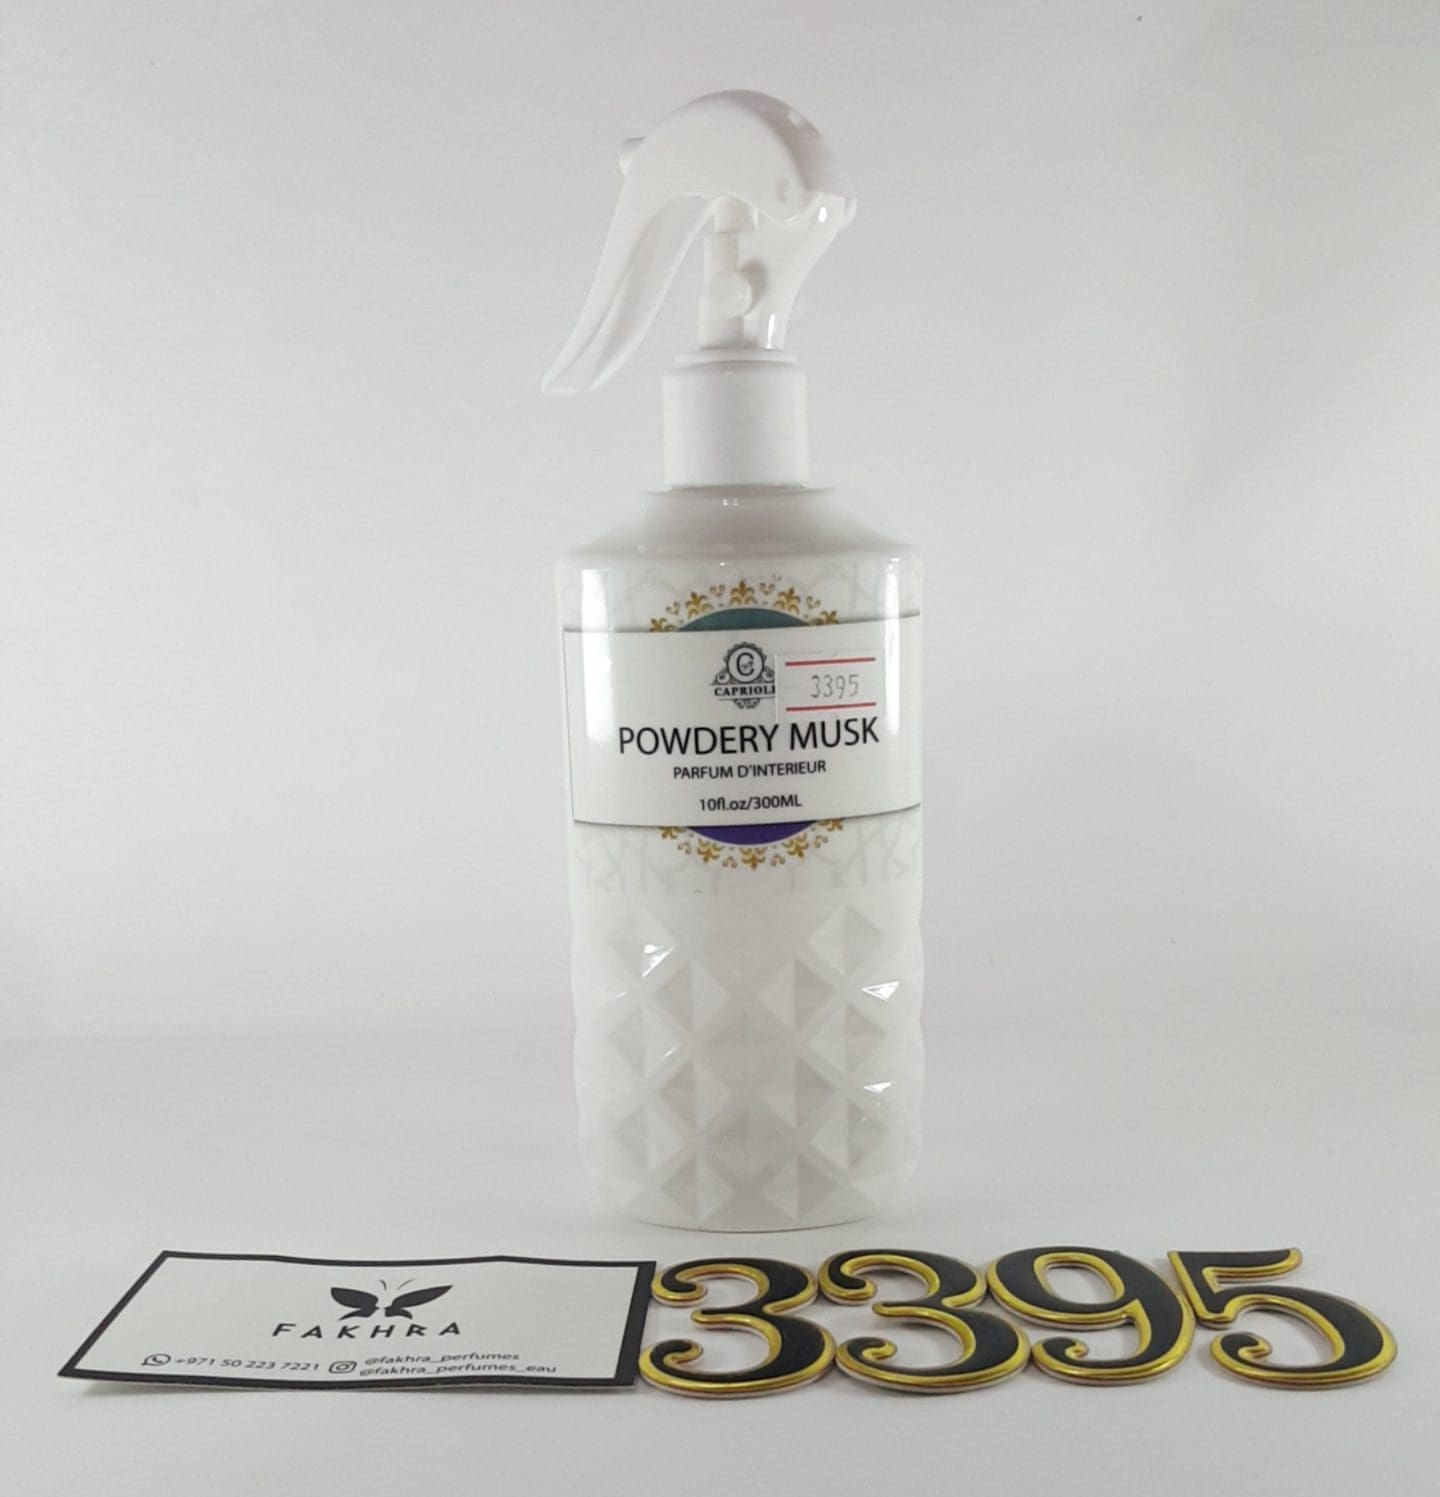 3395 Capriole POWDERY MUSK Home perfume 300 ml